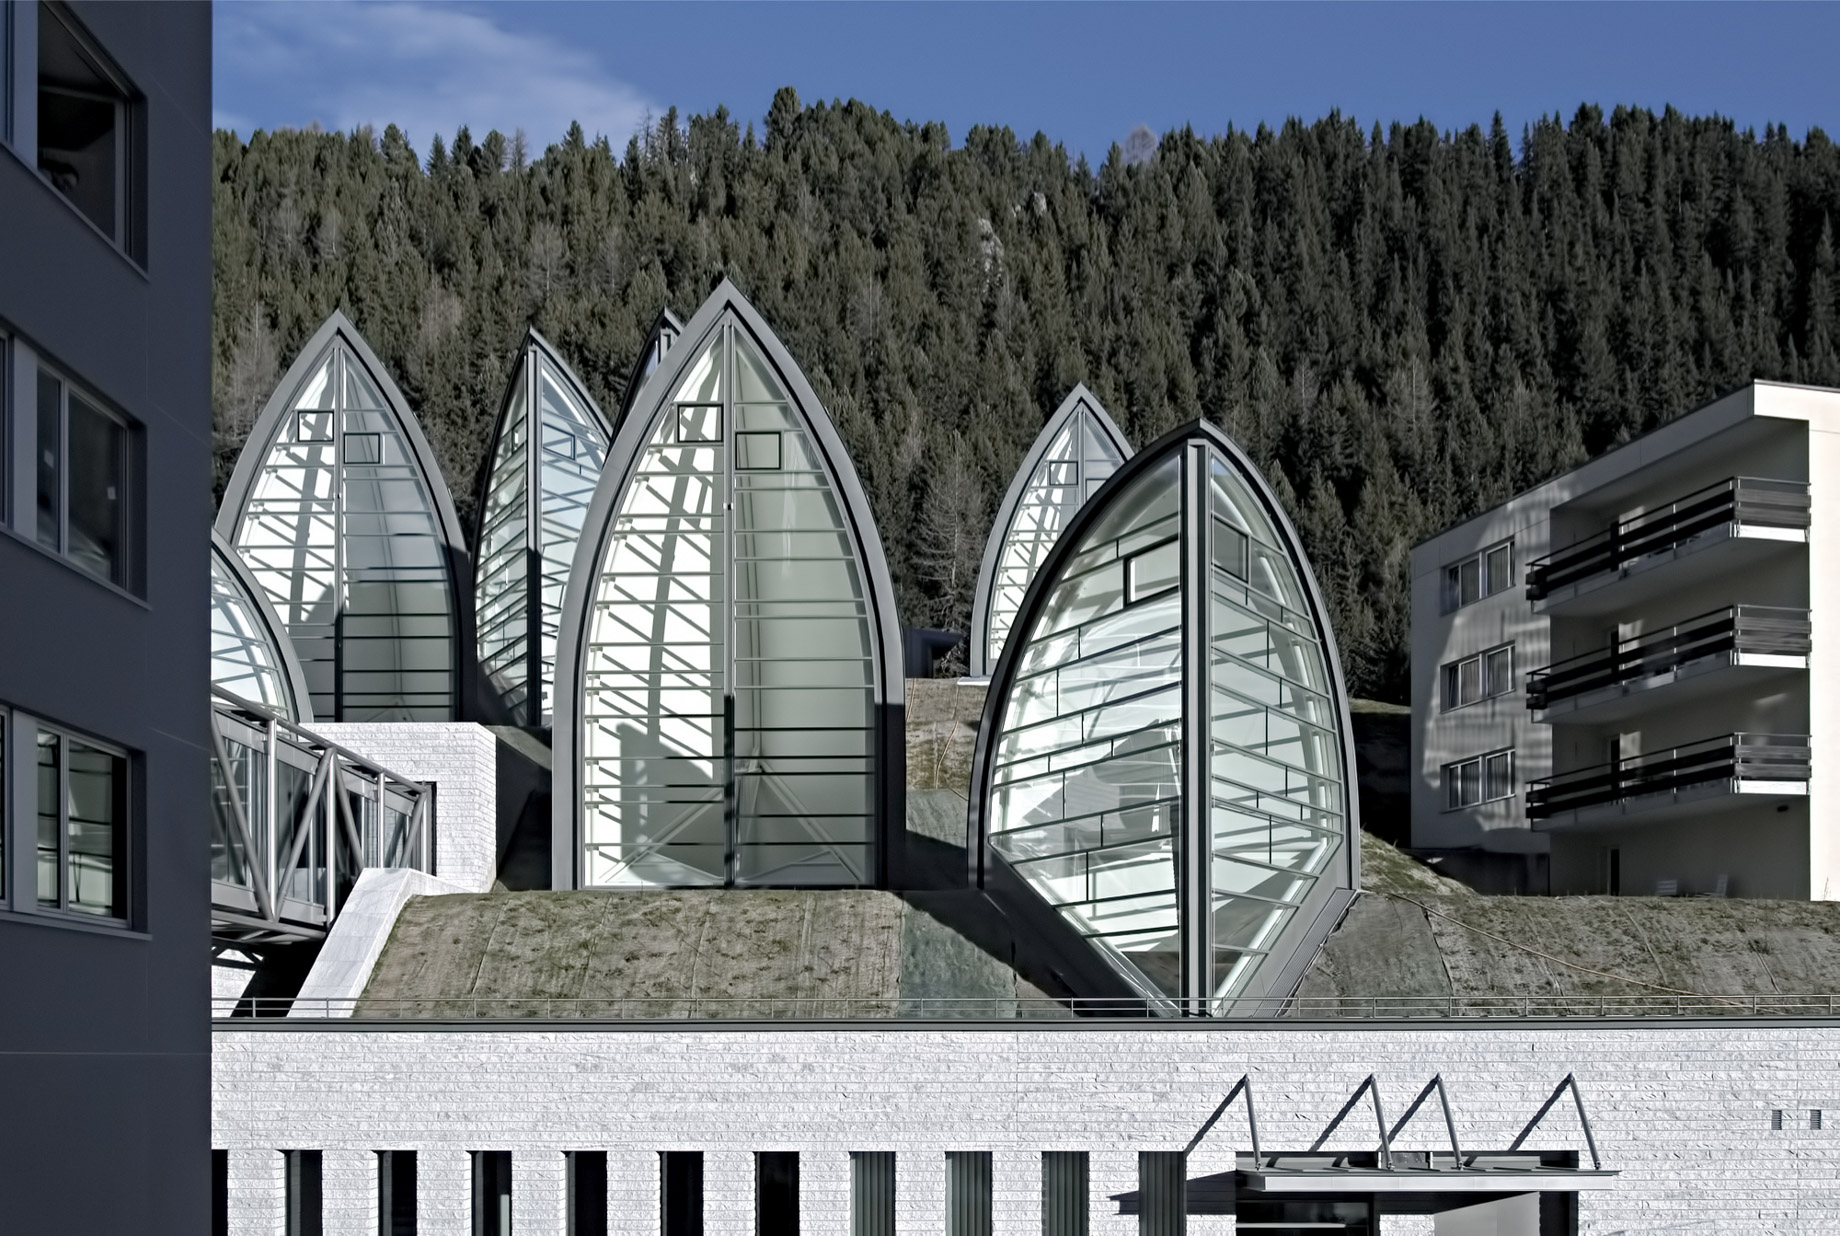 Tschuggen Grand Hotel – Arosa, Switzerland – Glass Sails